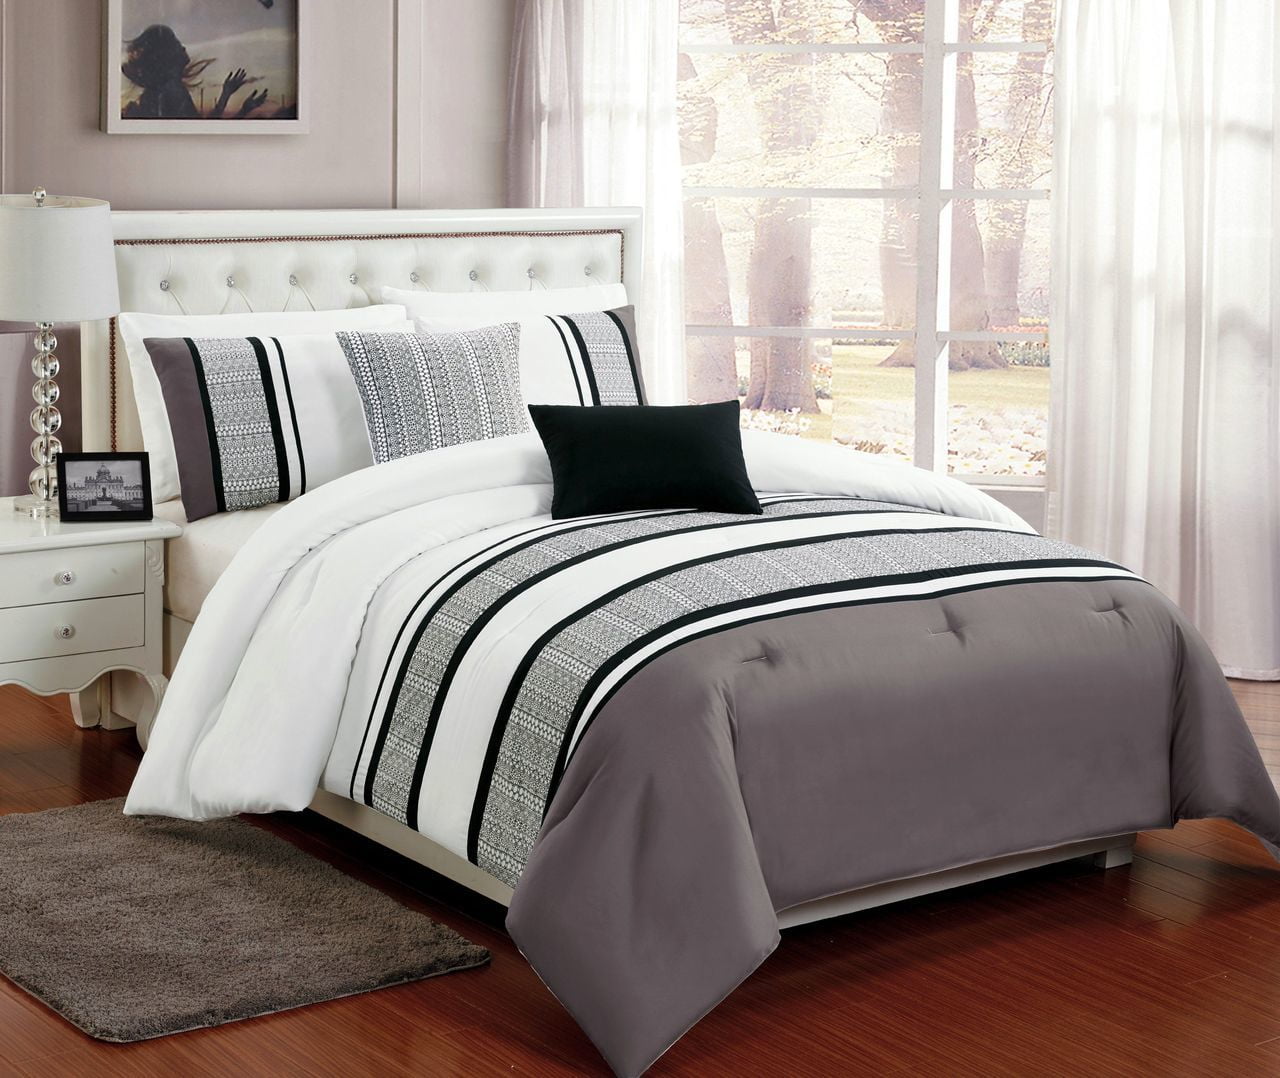 Black Comforter Bedding Set, Queen Size Bed Set Black And White